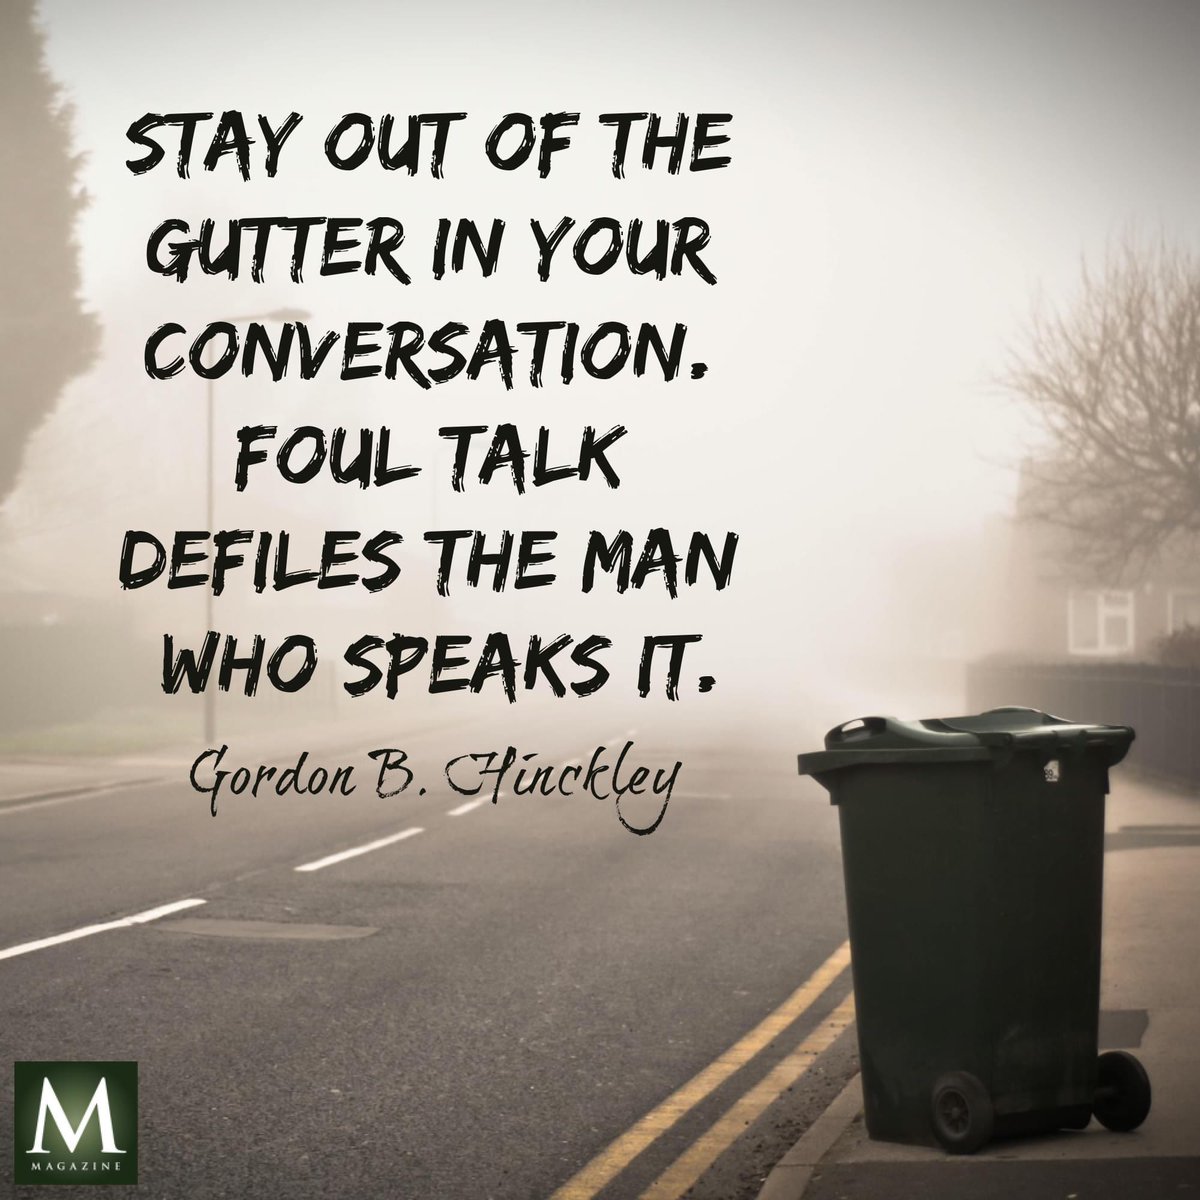 'Stay out of the gutter in your conversation.  Foul talk defiles the man who speaks it.' ~ President Gordon B. Hinckley 

#TrustGod #CountOnHim #WordOfGod #HearHim #ComeUntoChrist #ShareGoodness #ChildrenOfGod #GodLovesYou #TheChurchOfJesusChristOfLatterDaySaints